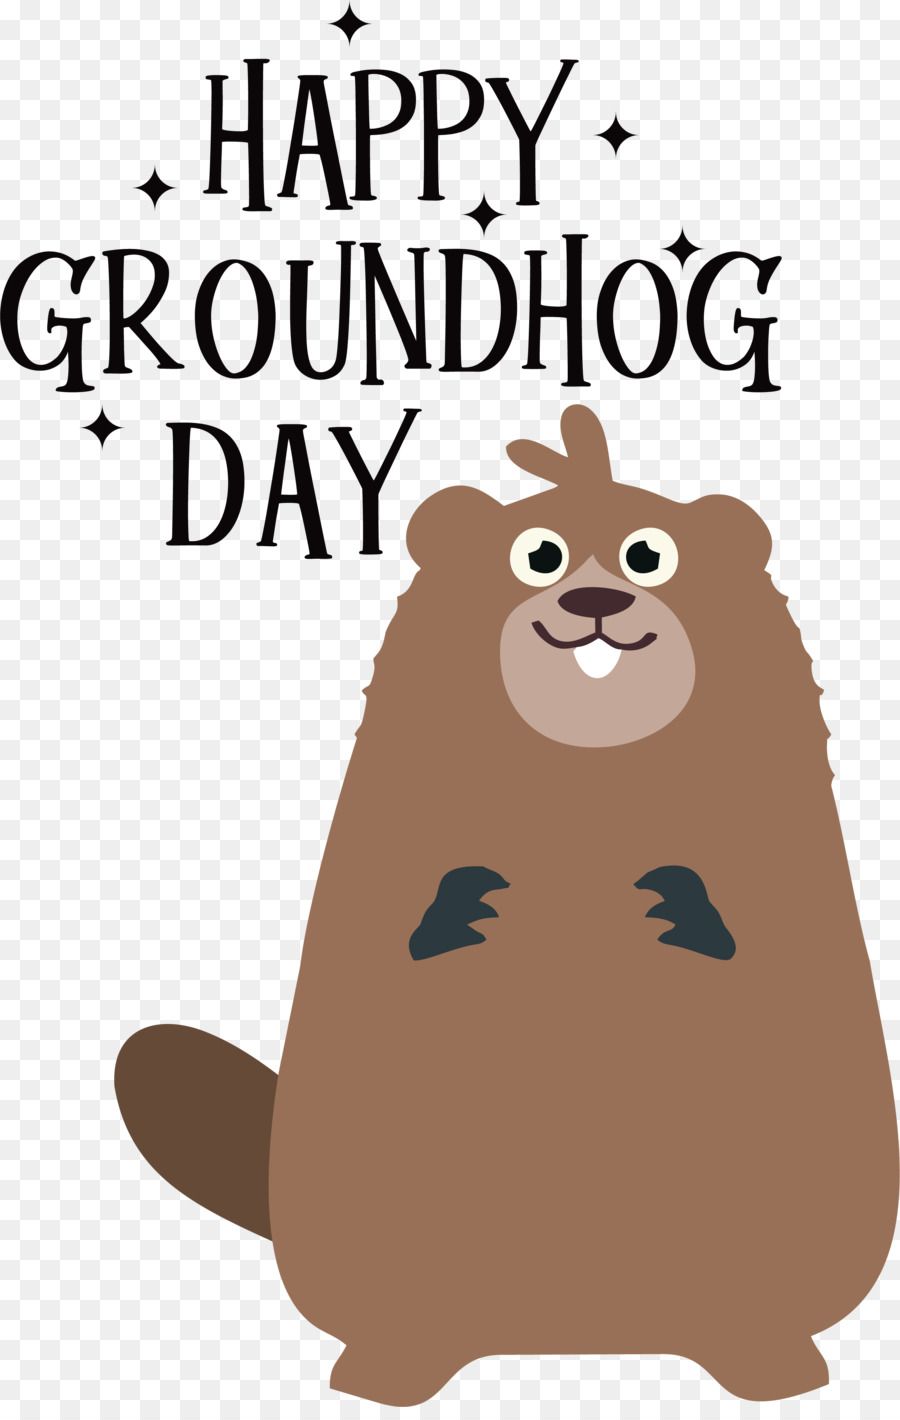 Happy Groundhog Day - 